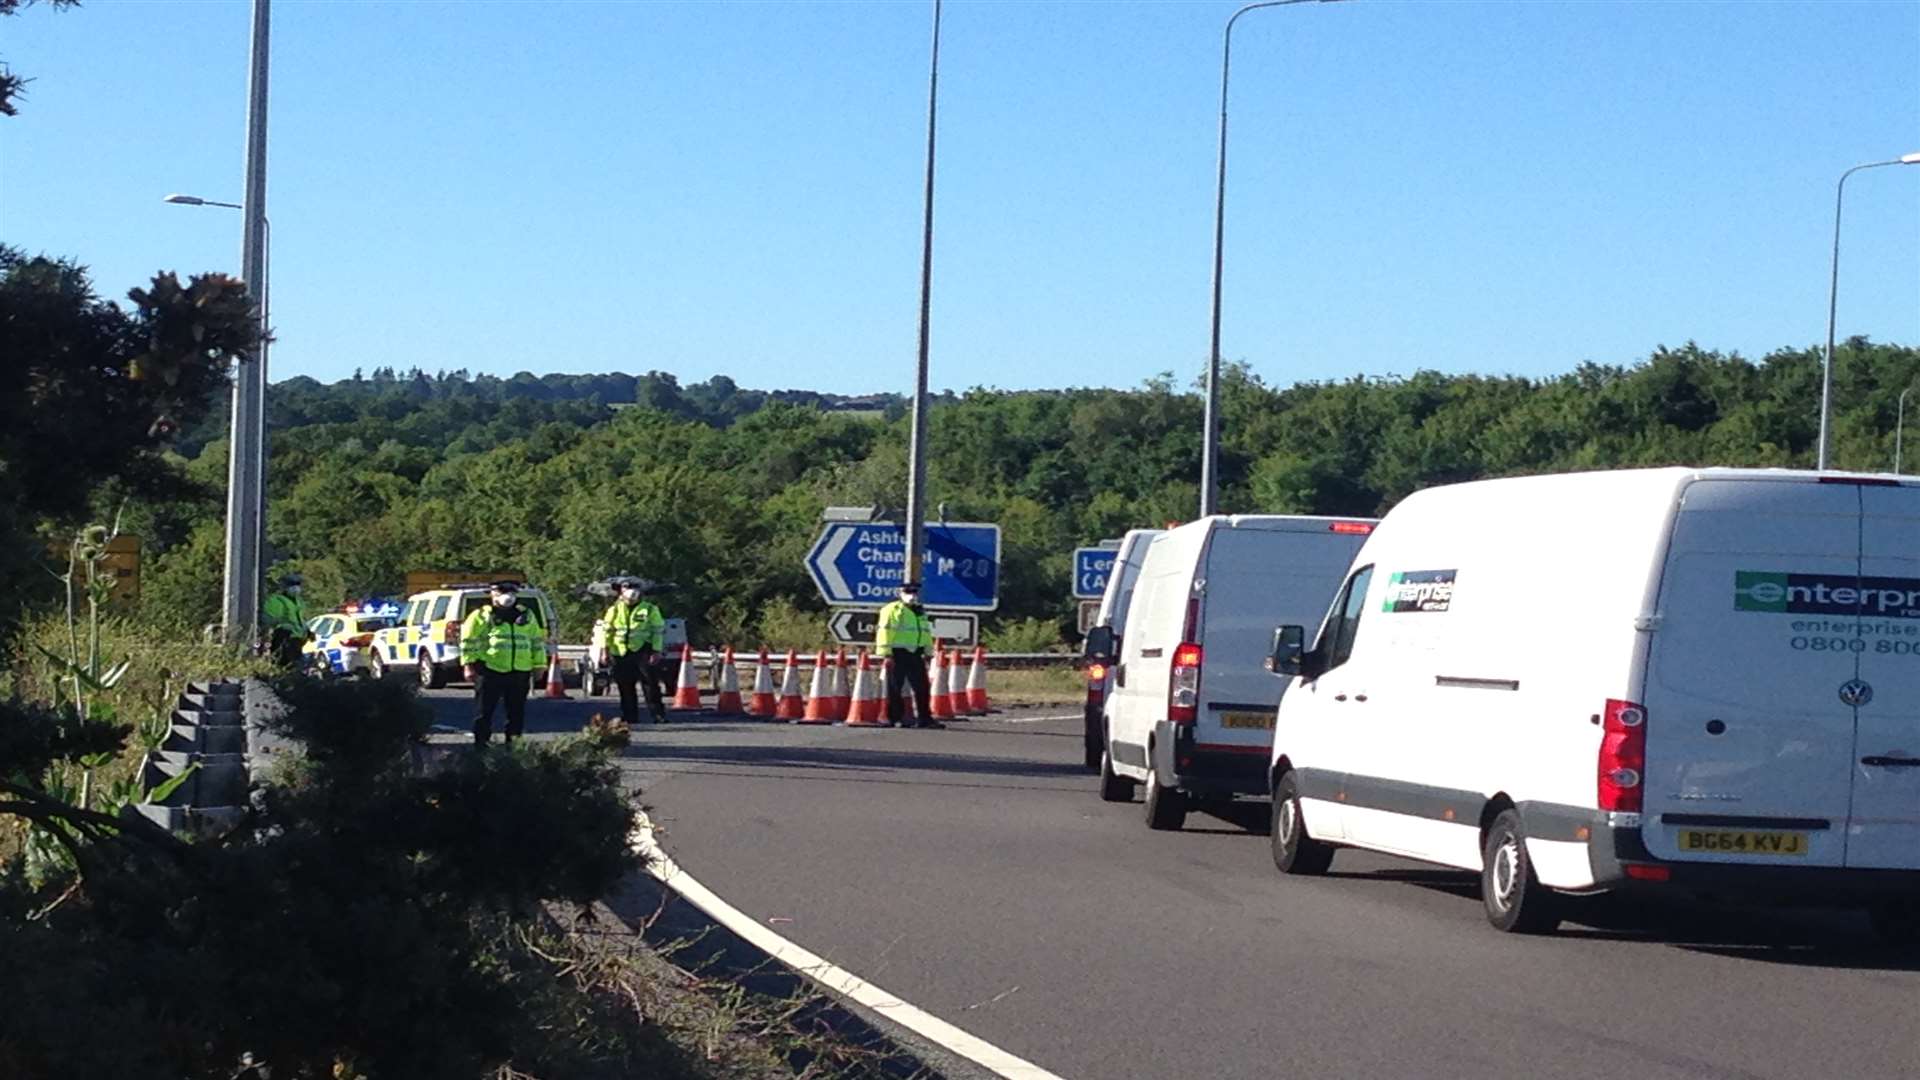 Police shut off the motorway at J8